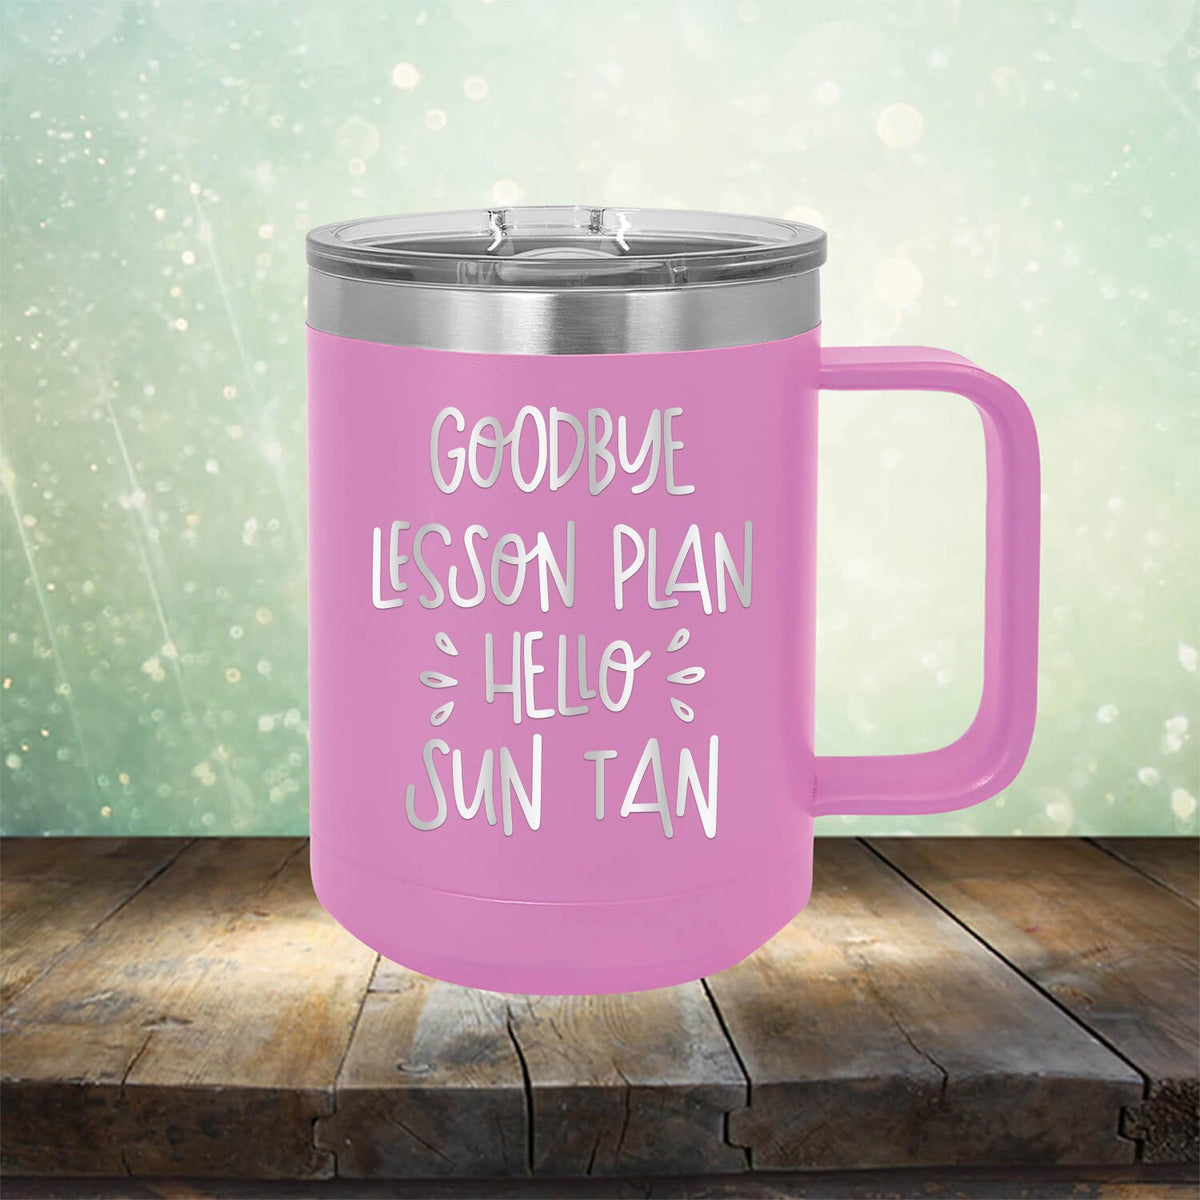 Goodbye Lesson Plan Hello Sun Tan - Laser Etched Tumbler Mug